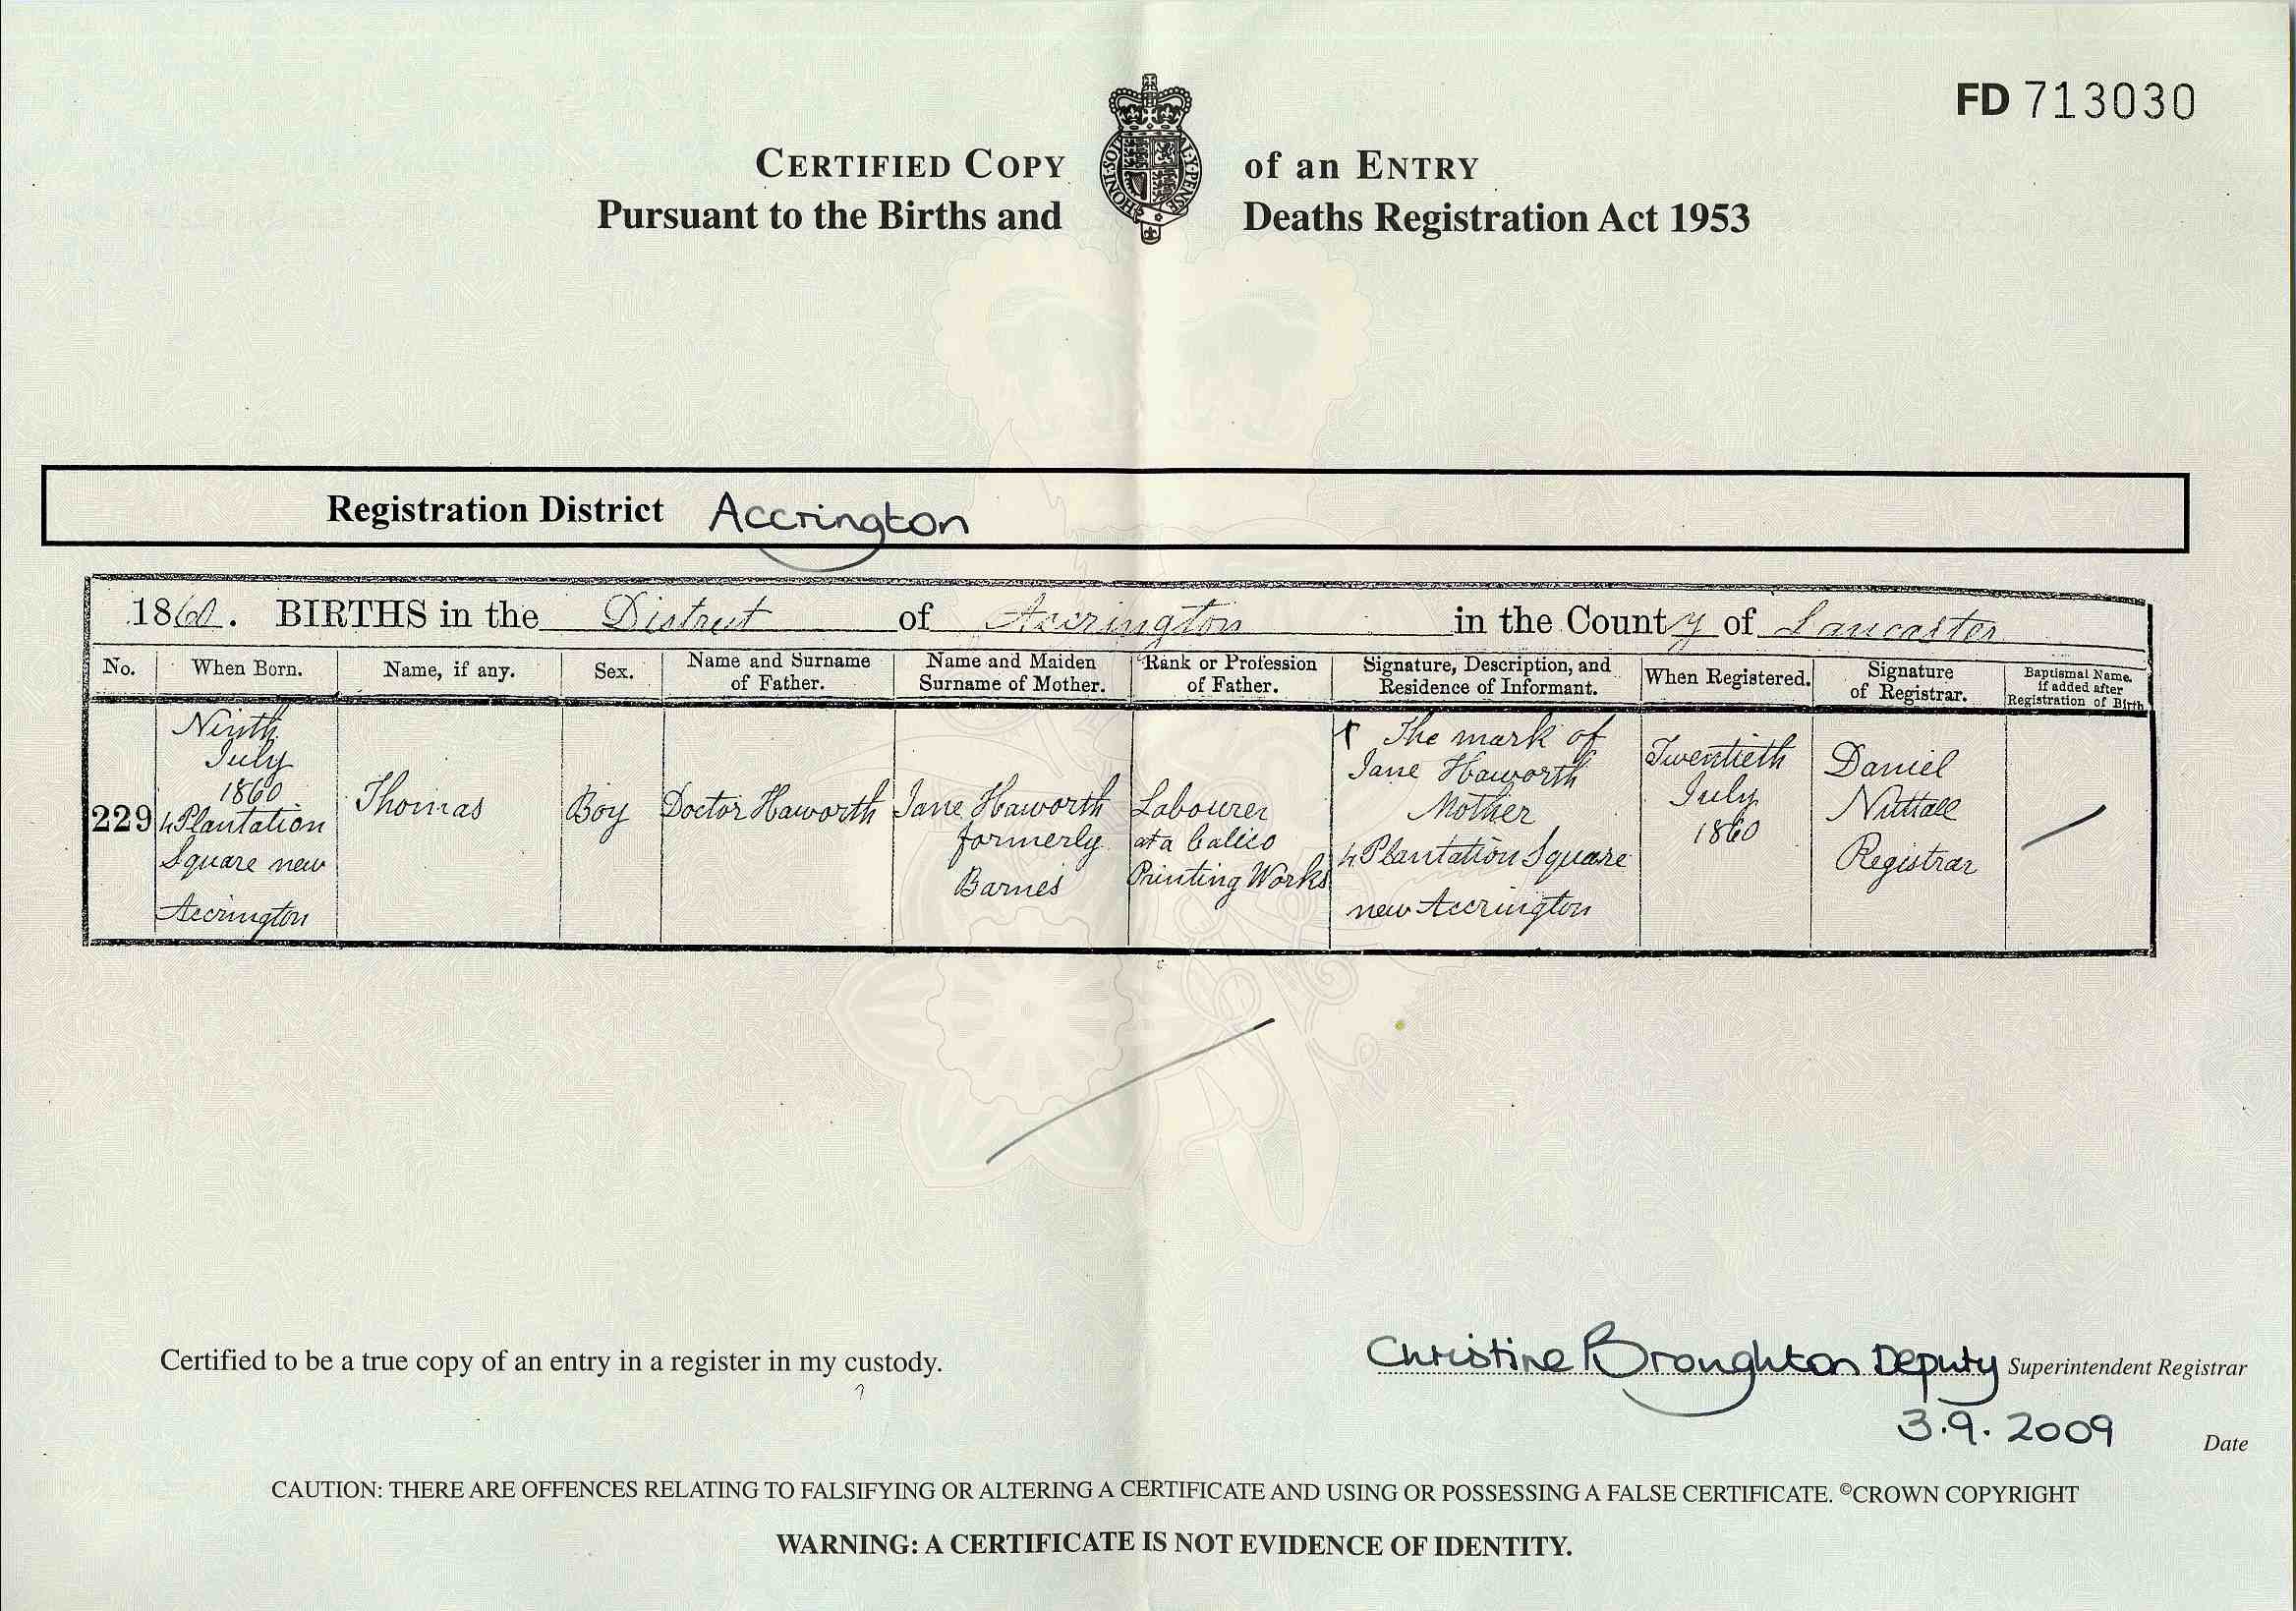 British birth certificate